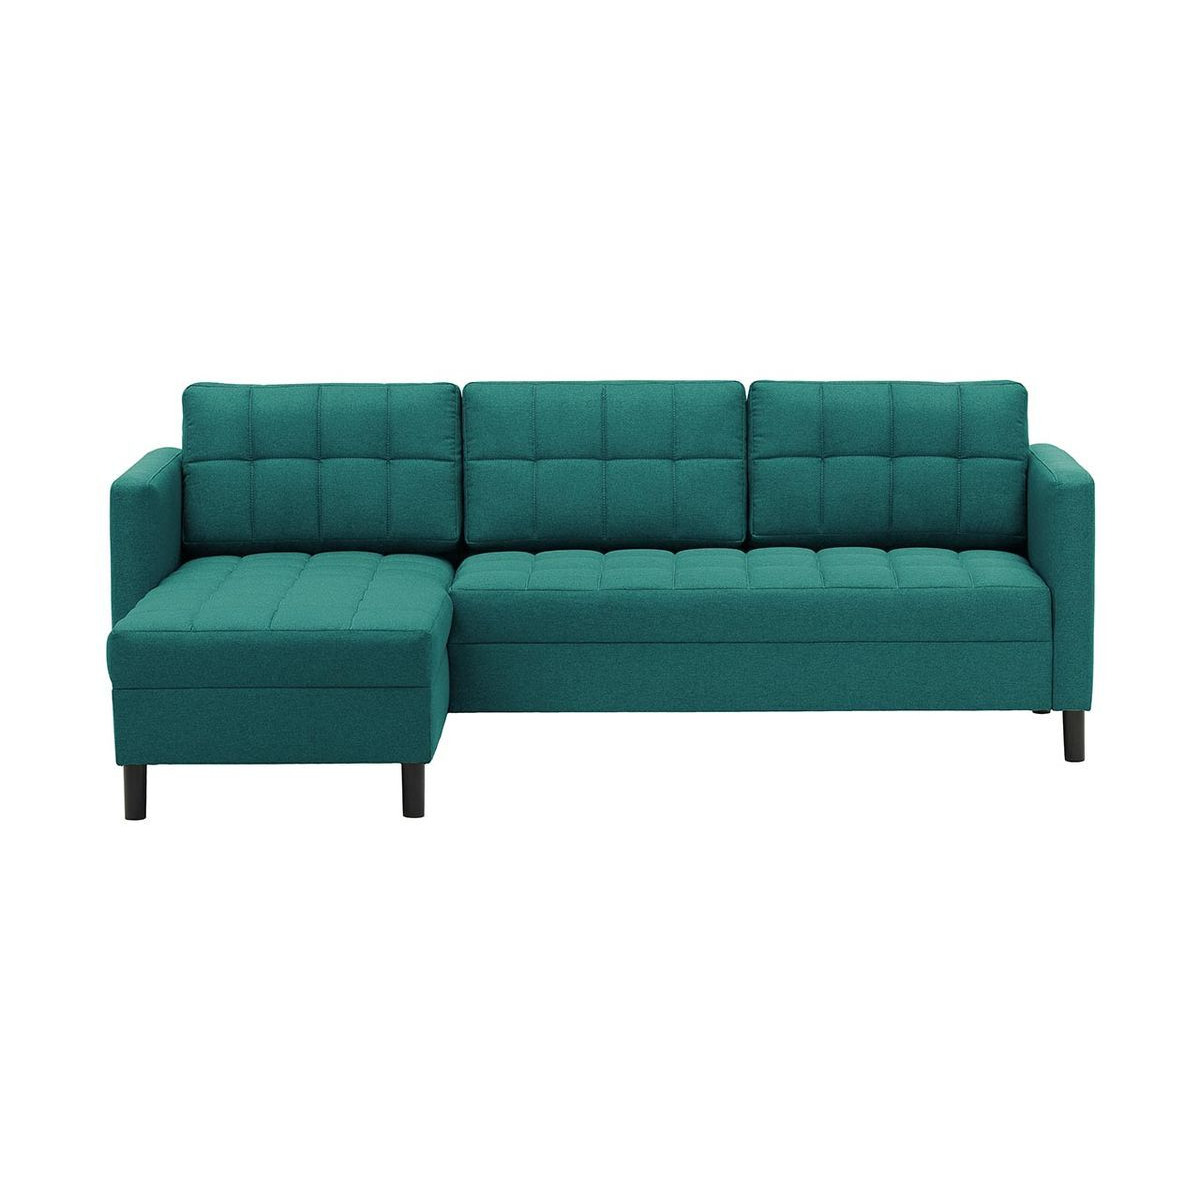 Ludo Universal Corner Sofa Bed, turquoise - image 1